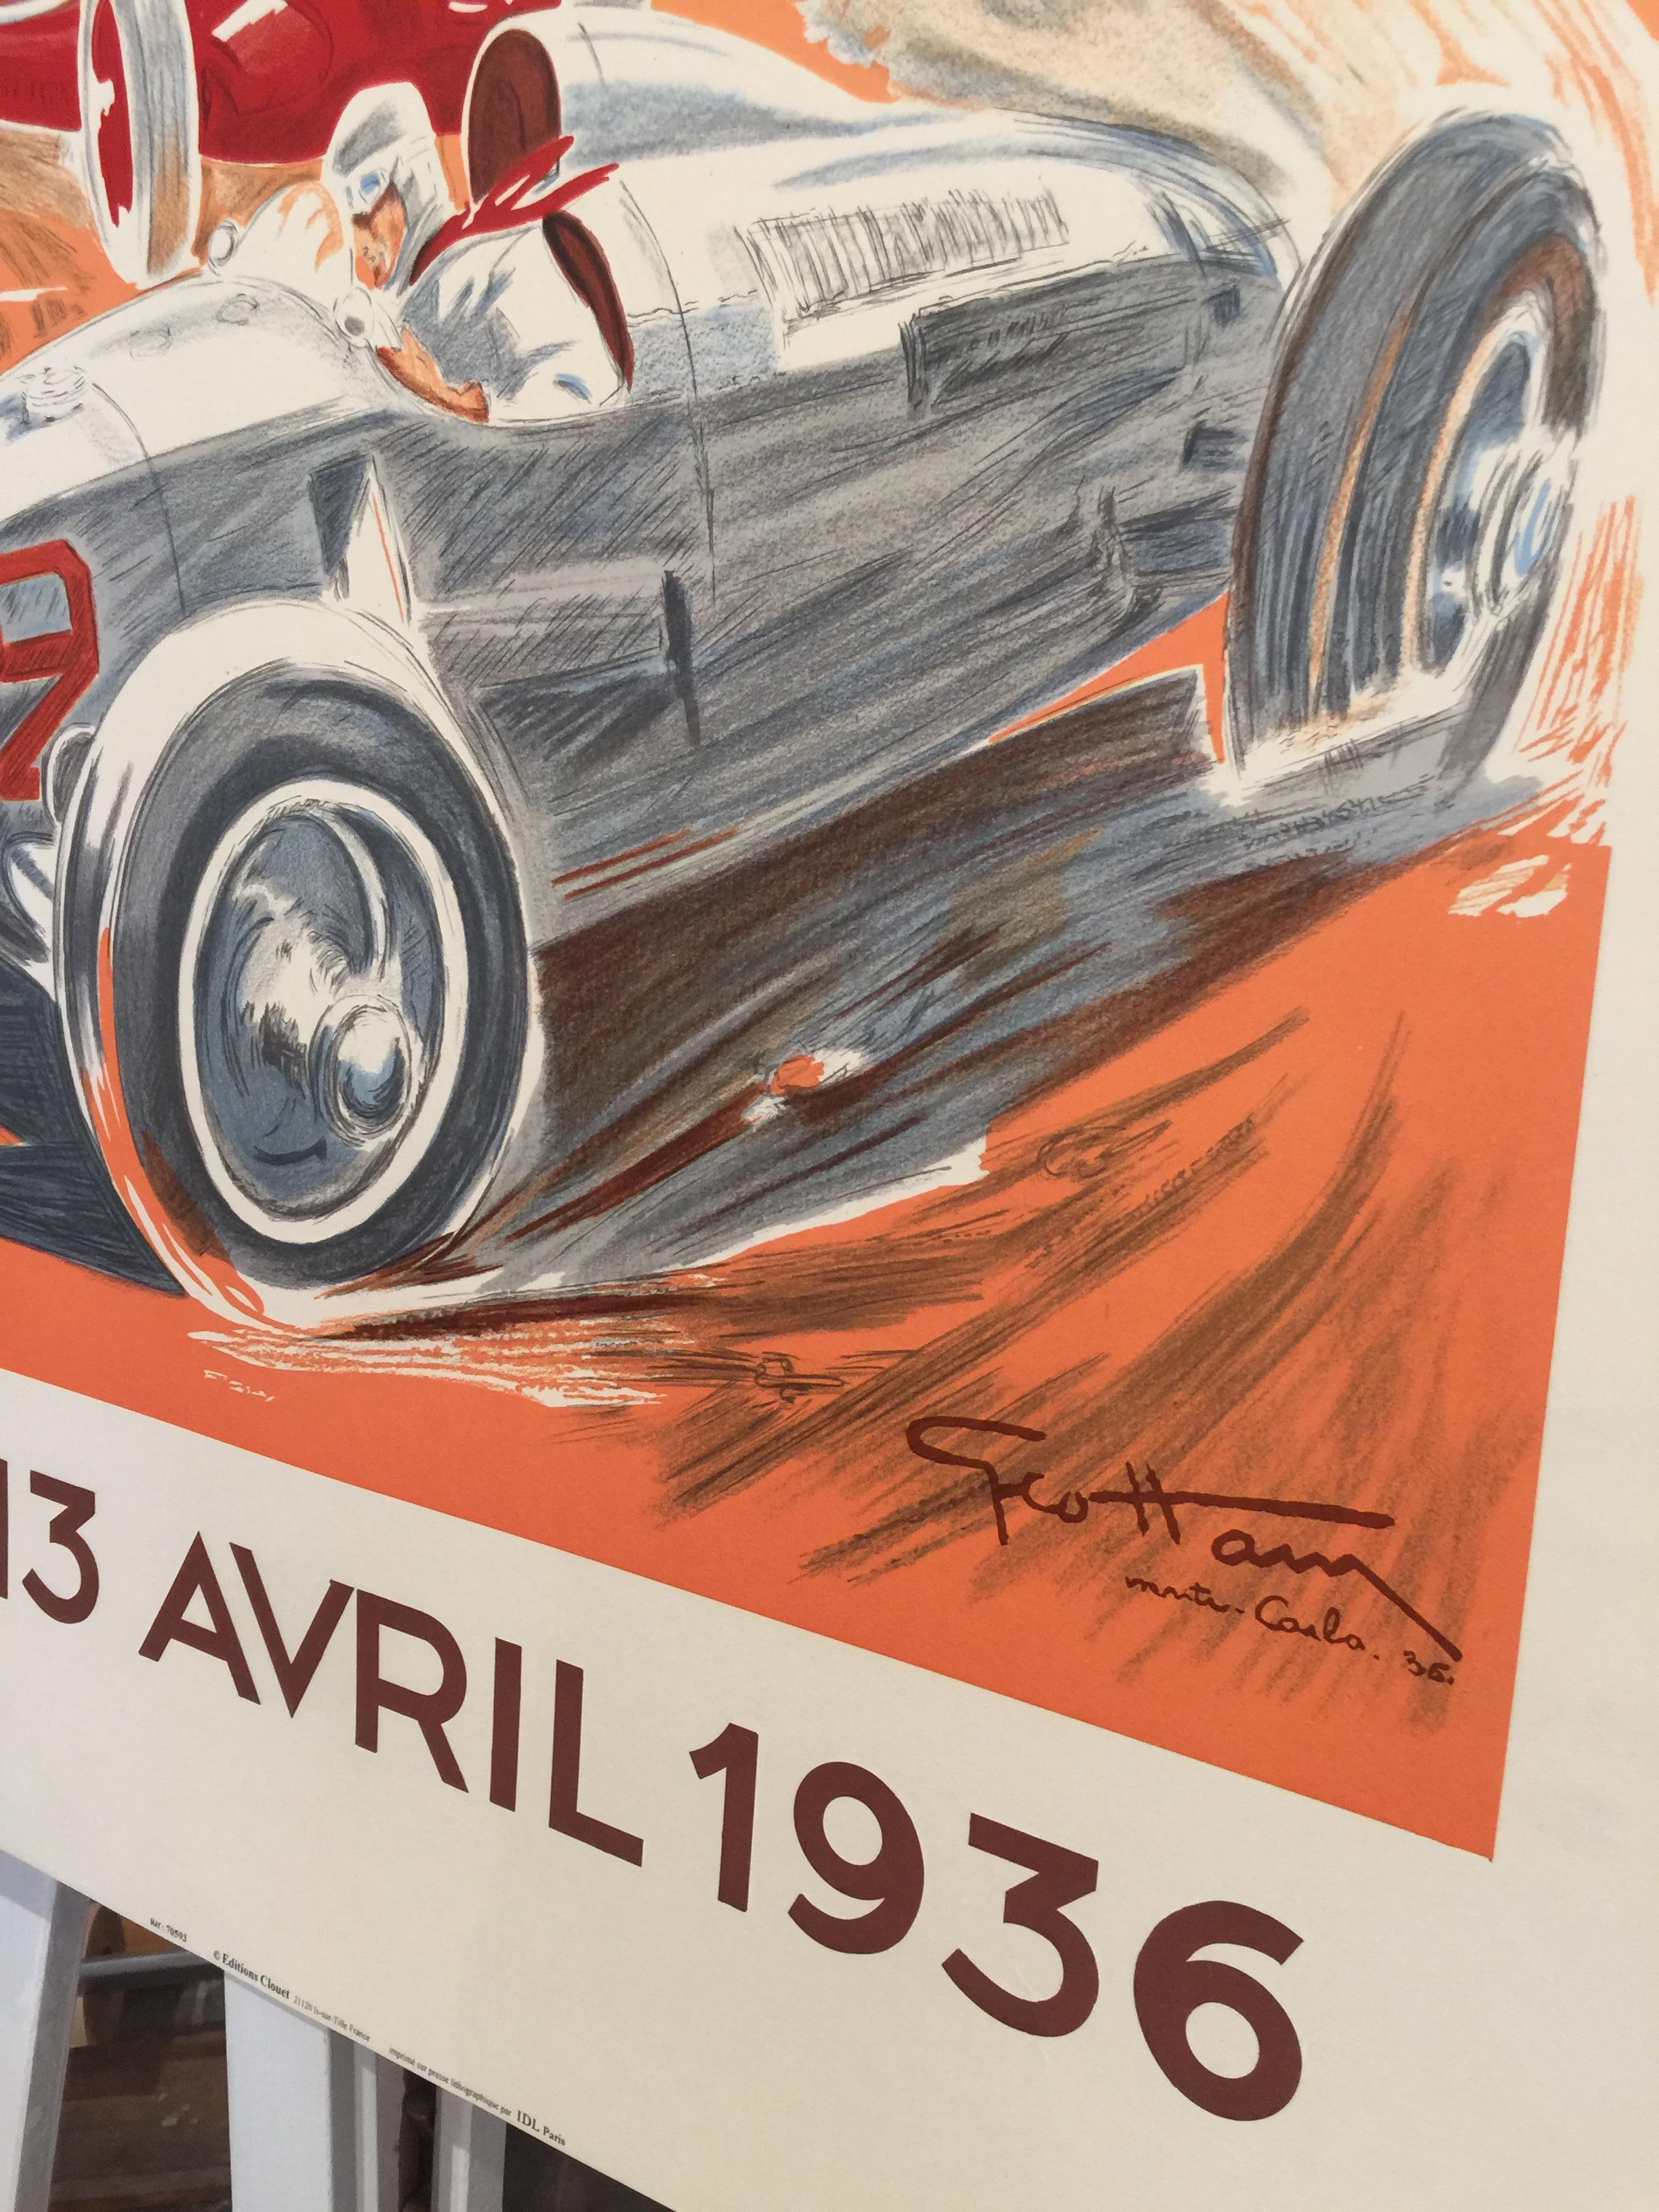 vintage monaco grand prix poster